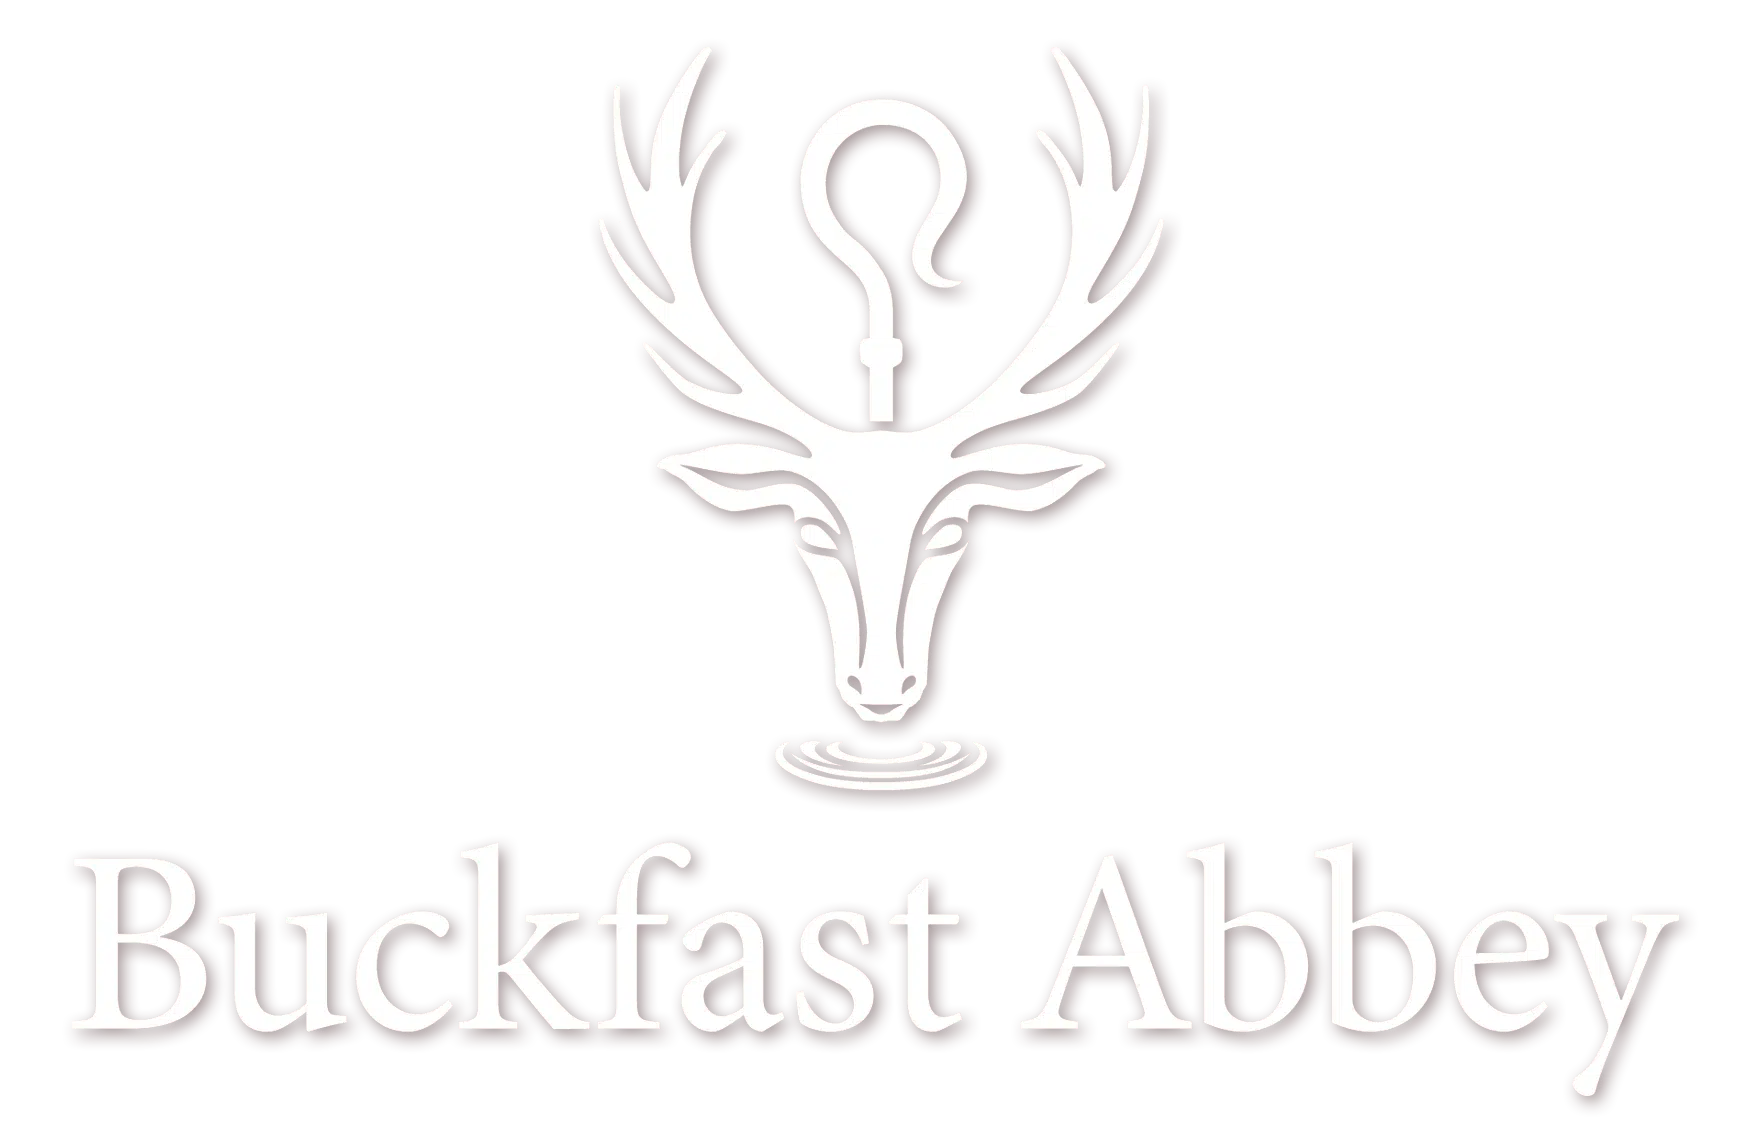 buckfast abbey tour